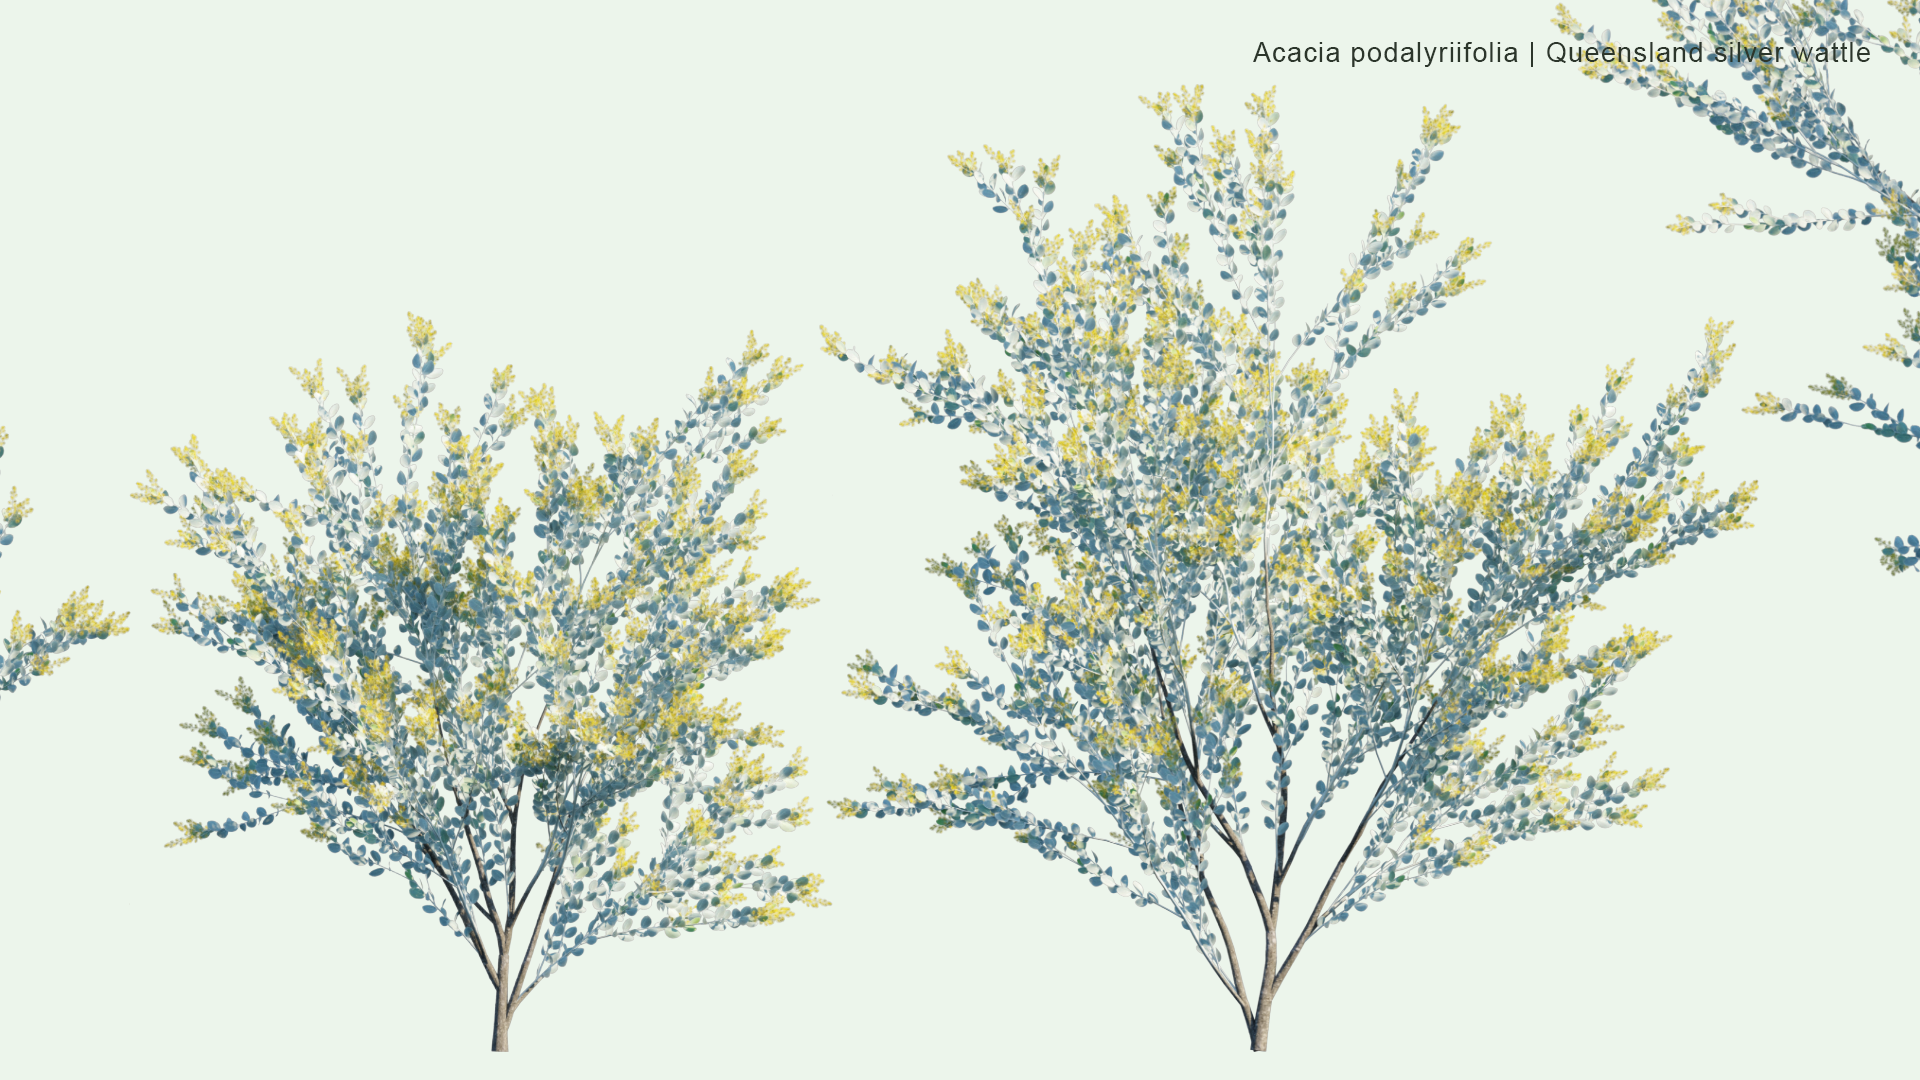 2D Acacia Podalyriifolia - Mount Morgan Wattle, Queensland Silver Wattle, Queensland Wattle, Pearl Acacia, Pearl Wattle, Silver Wattle, Mimosa